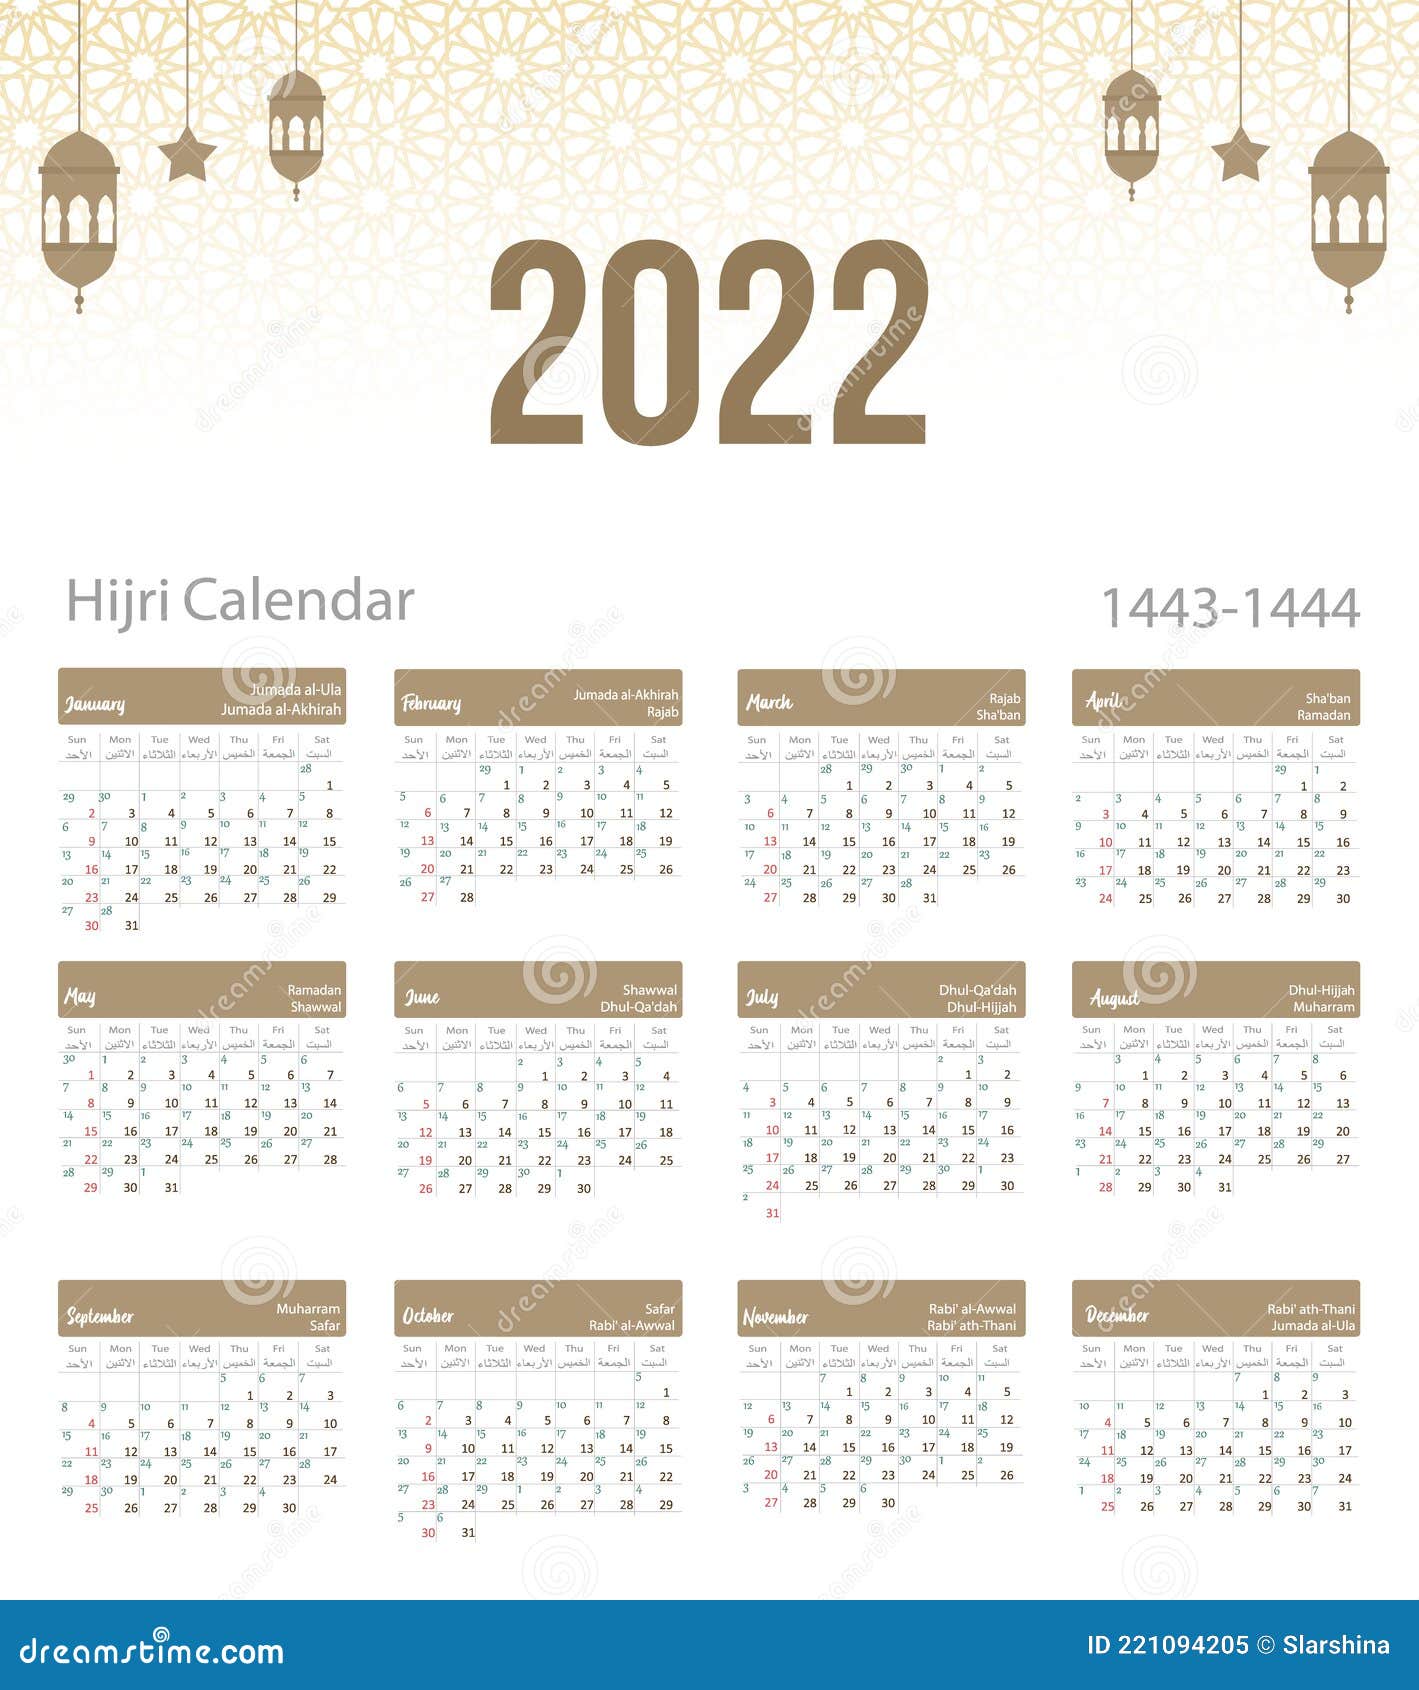 solar-hijri-calendar-2022-printable-calendar-2023